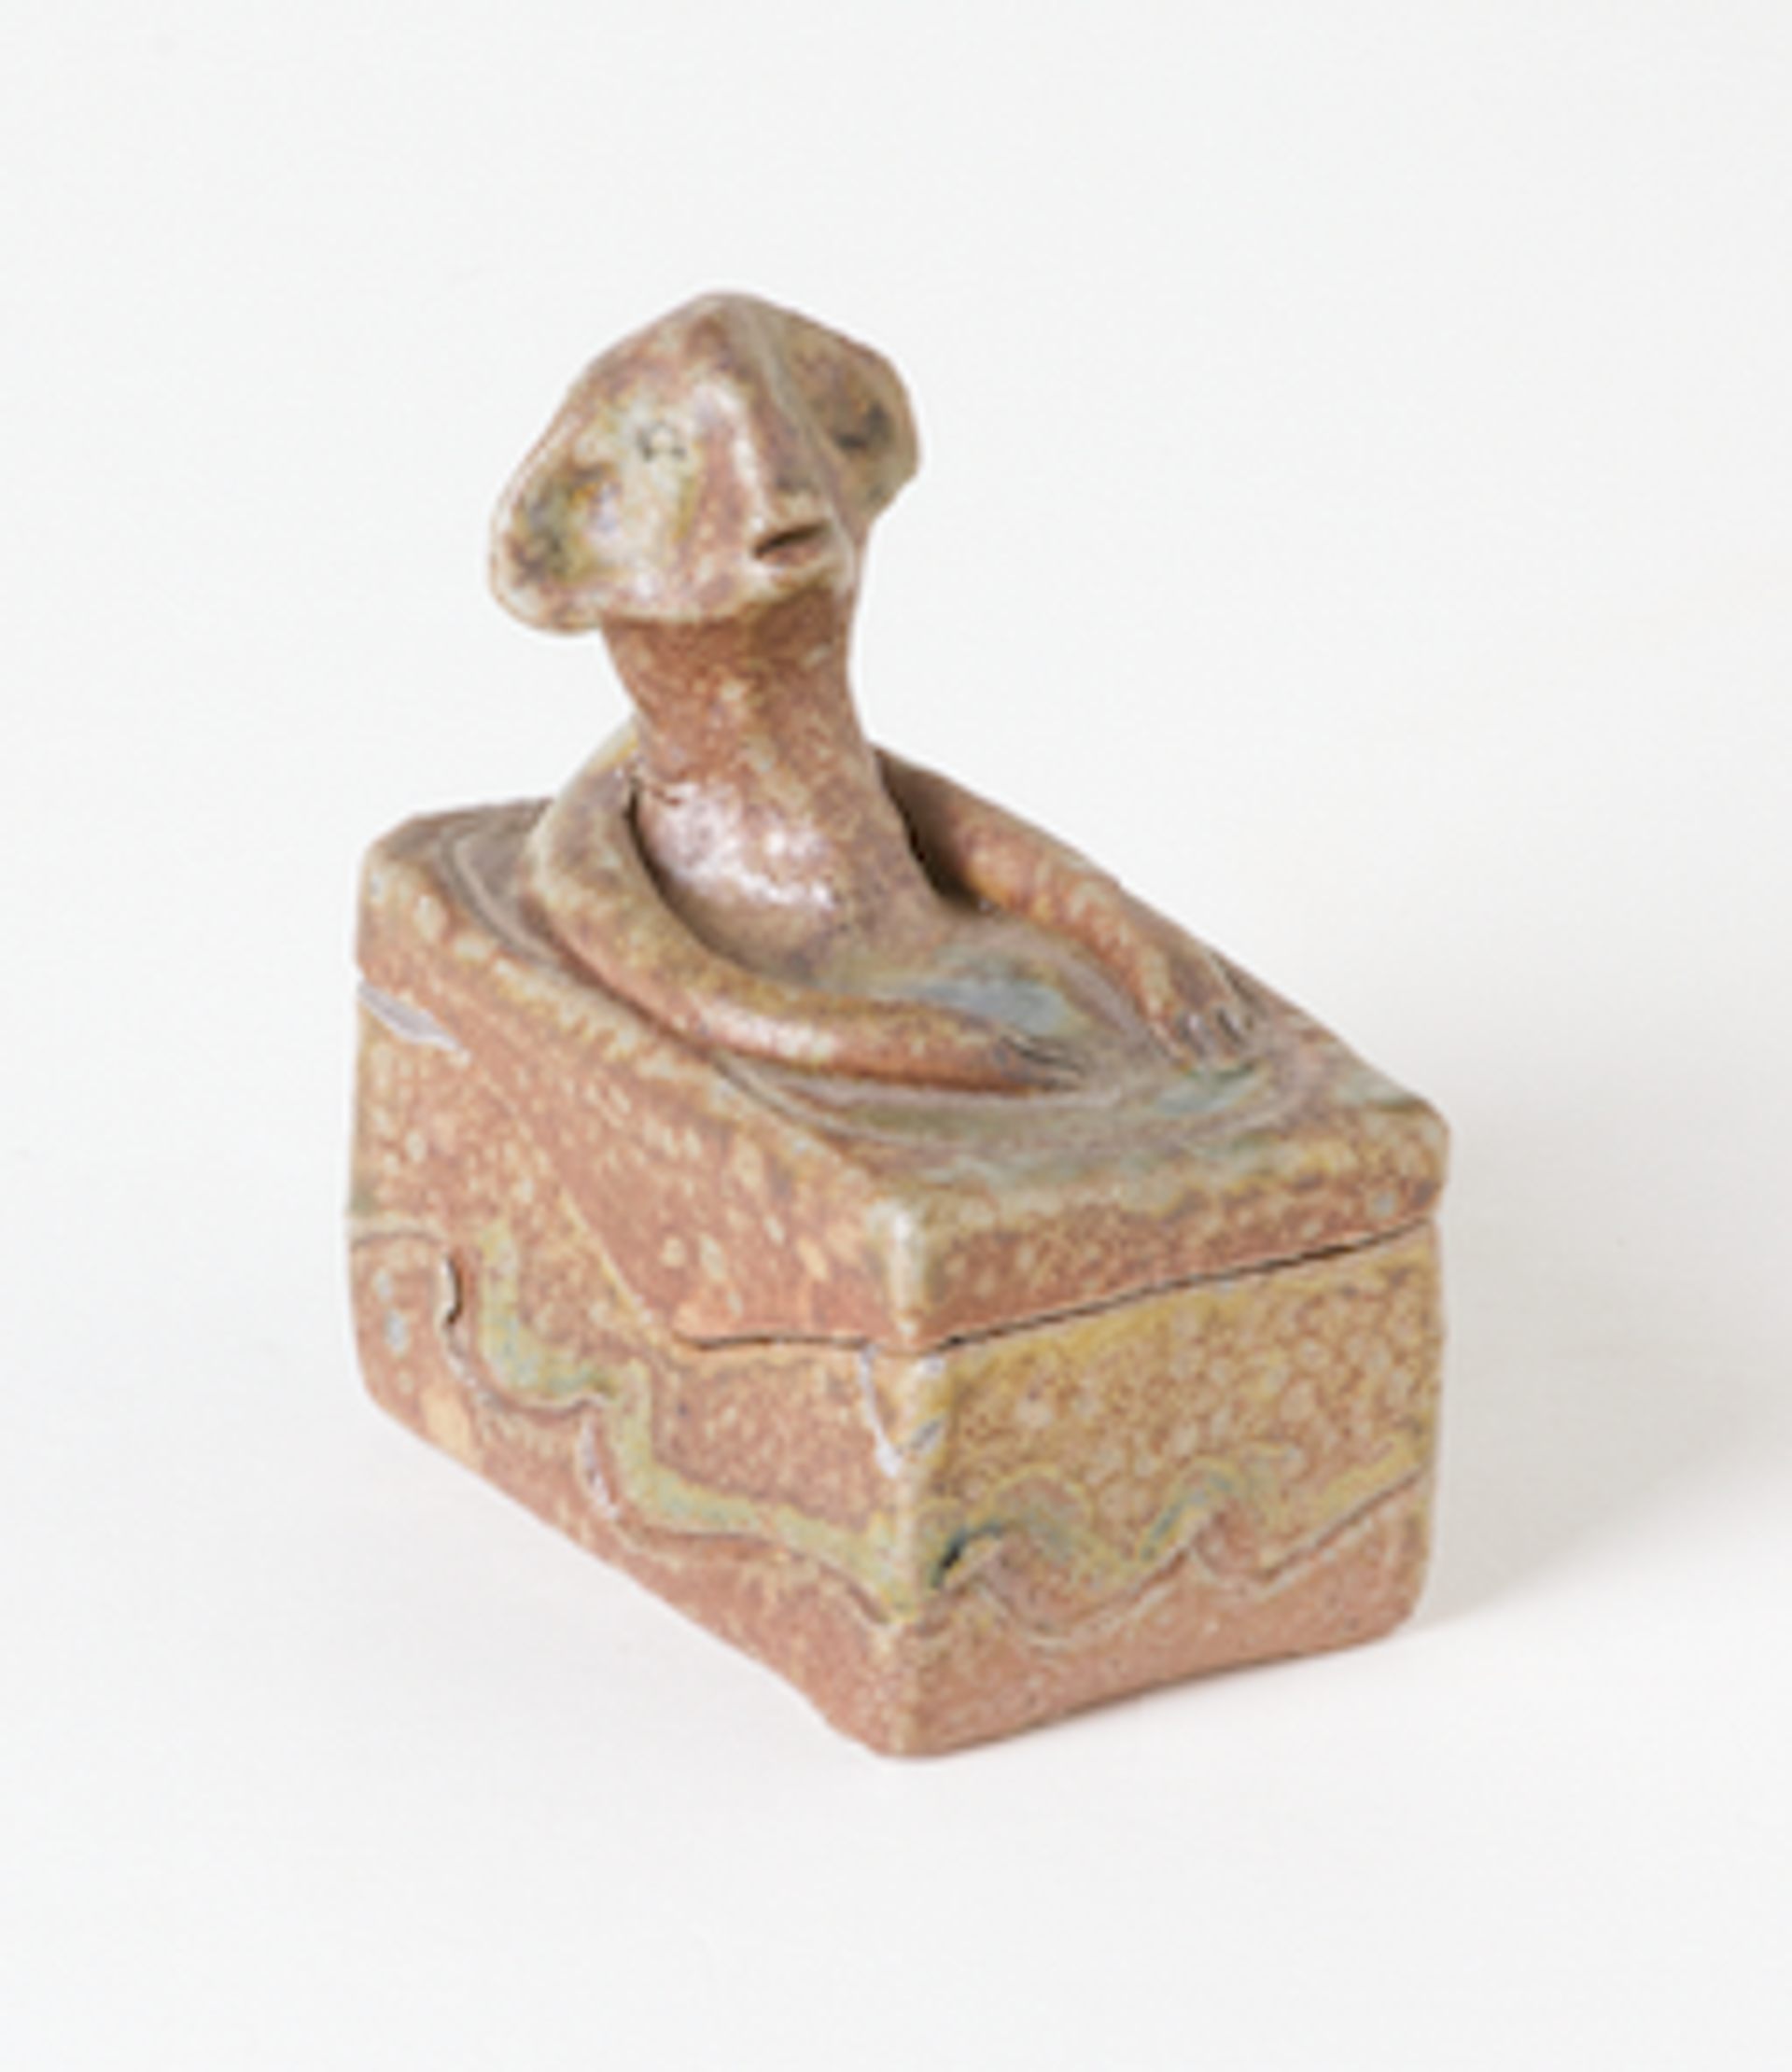 Ceramic box by Estherly Allen